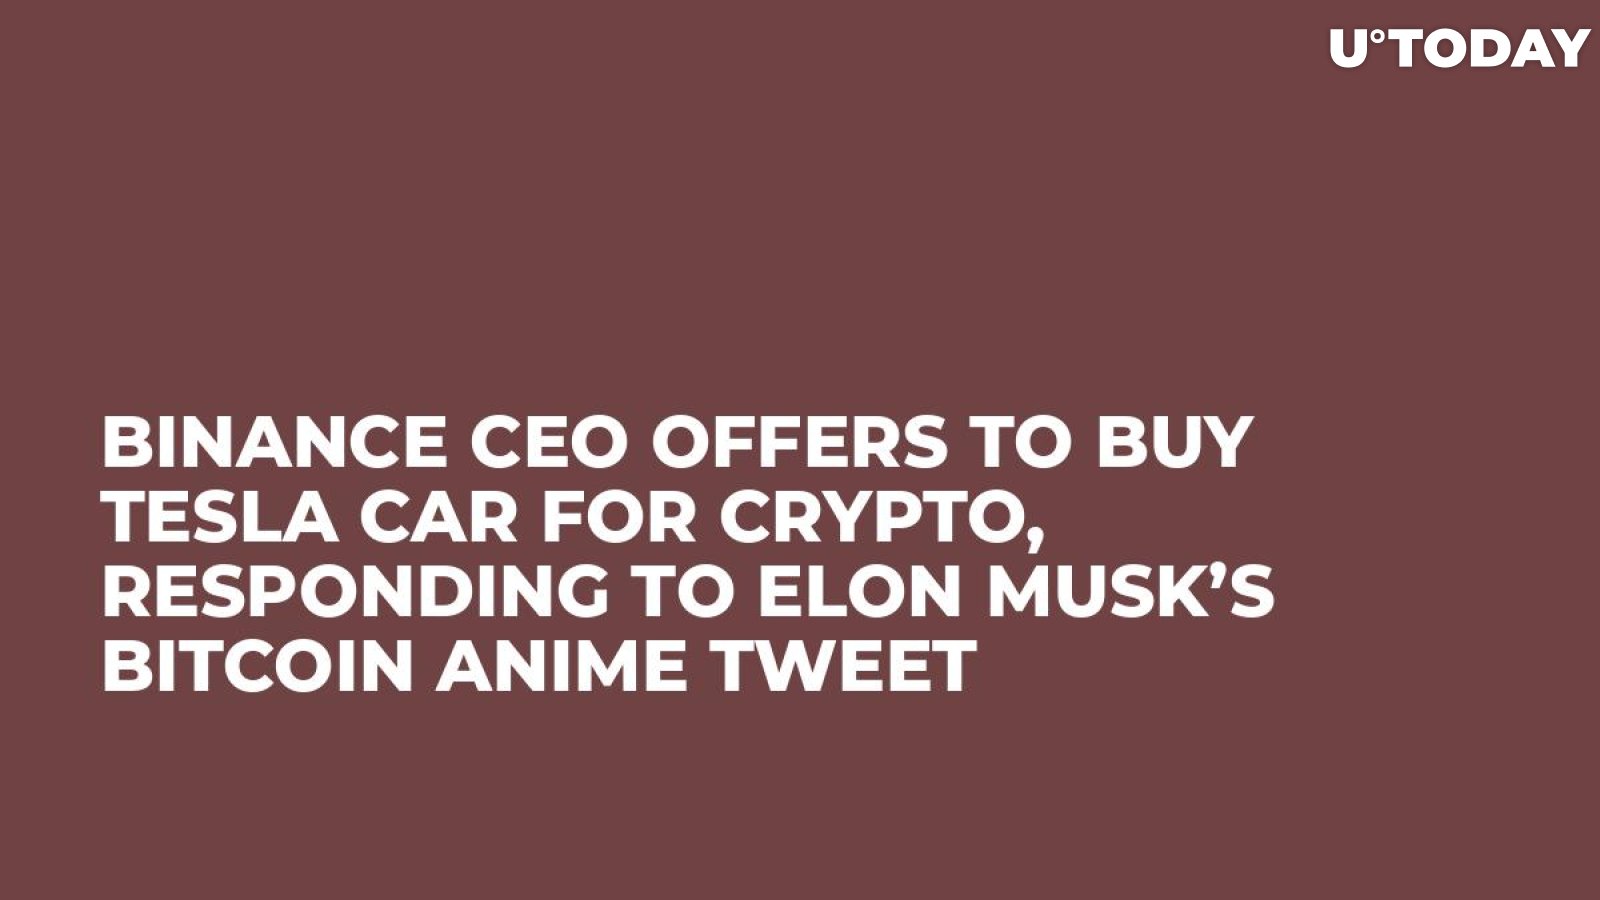 Binance CEO Offers to Buy Tesla Car for Crypto, Responding to Elon Musk’s Bitcoin Anime Tweet